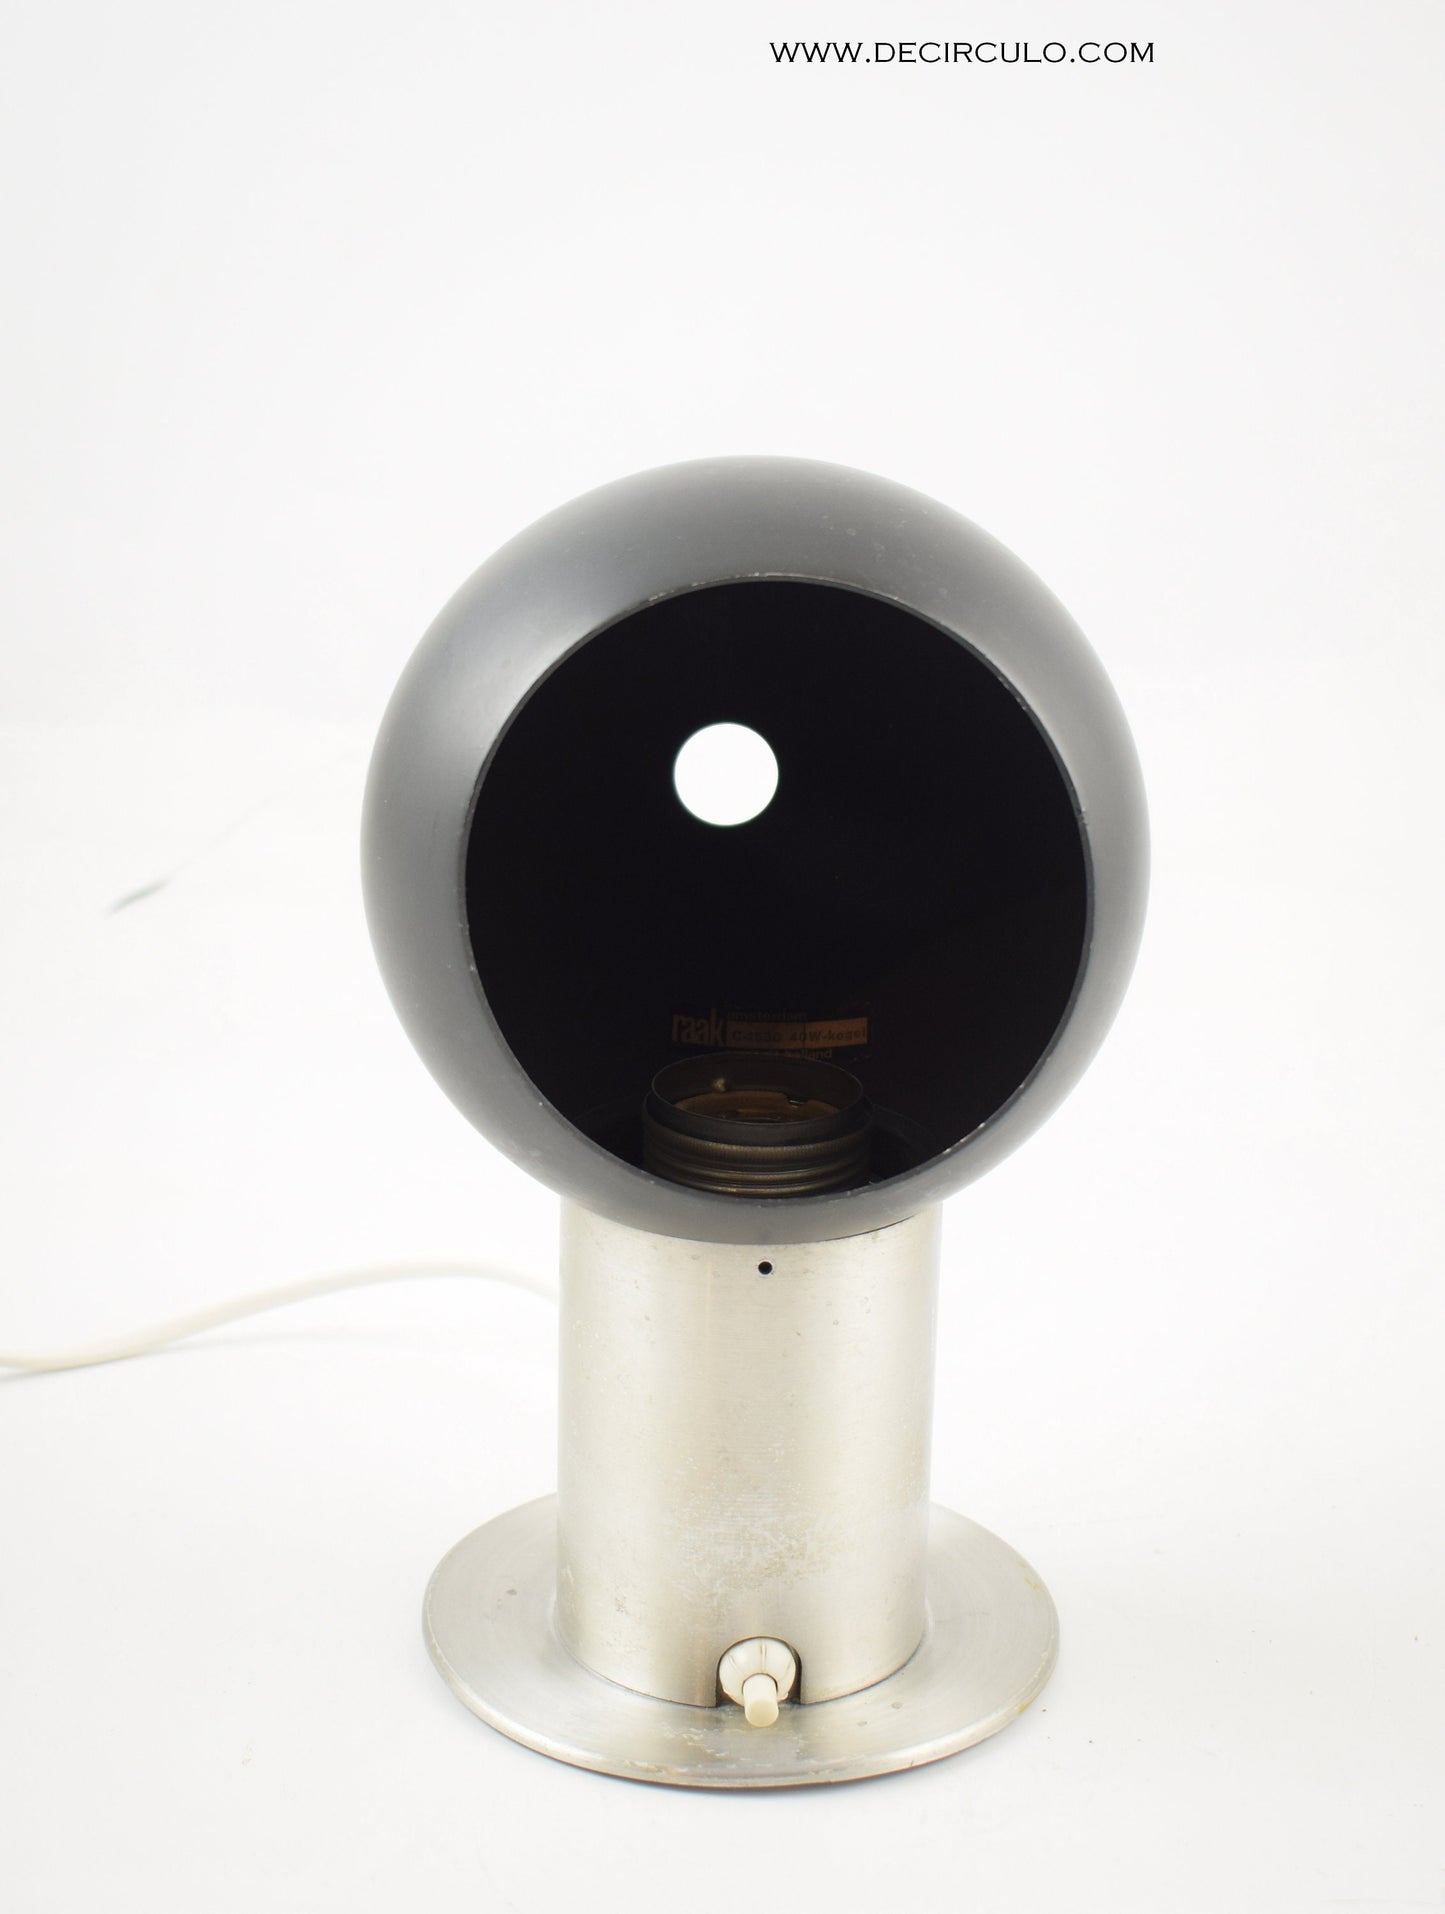 Raak lichtkogel - light bullet - C-1530 wall light or table lamp  from Raak light architects Amsterdam 1960s